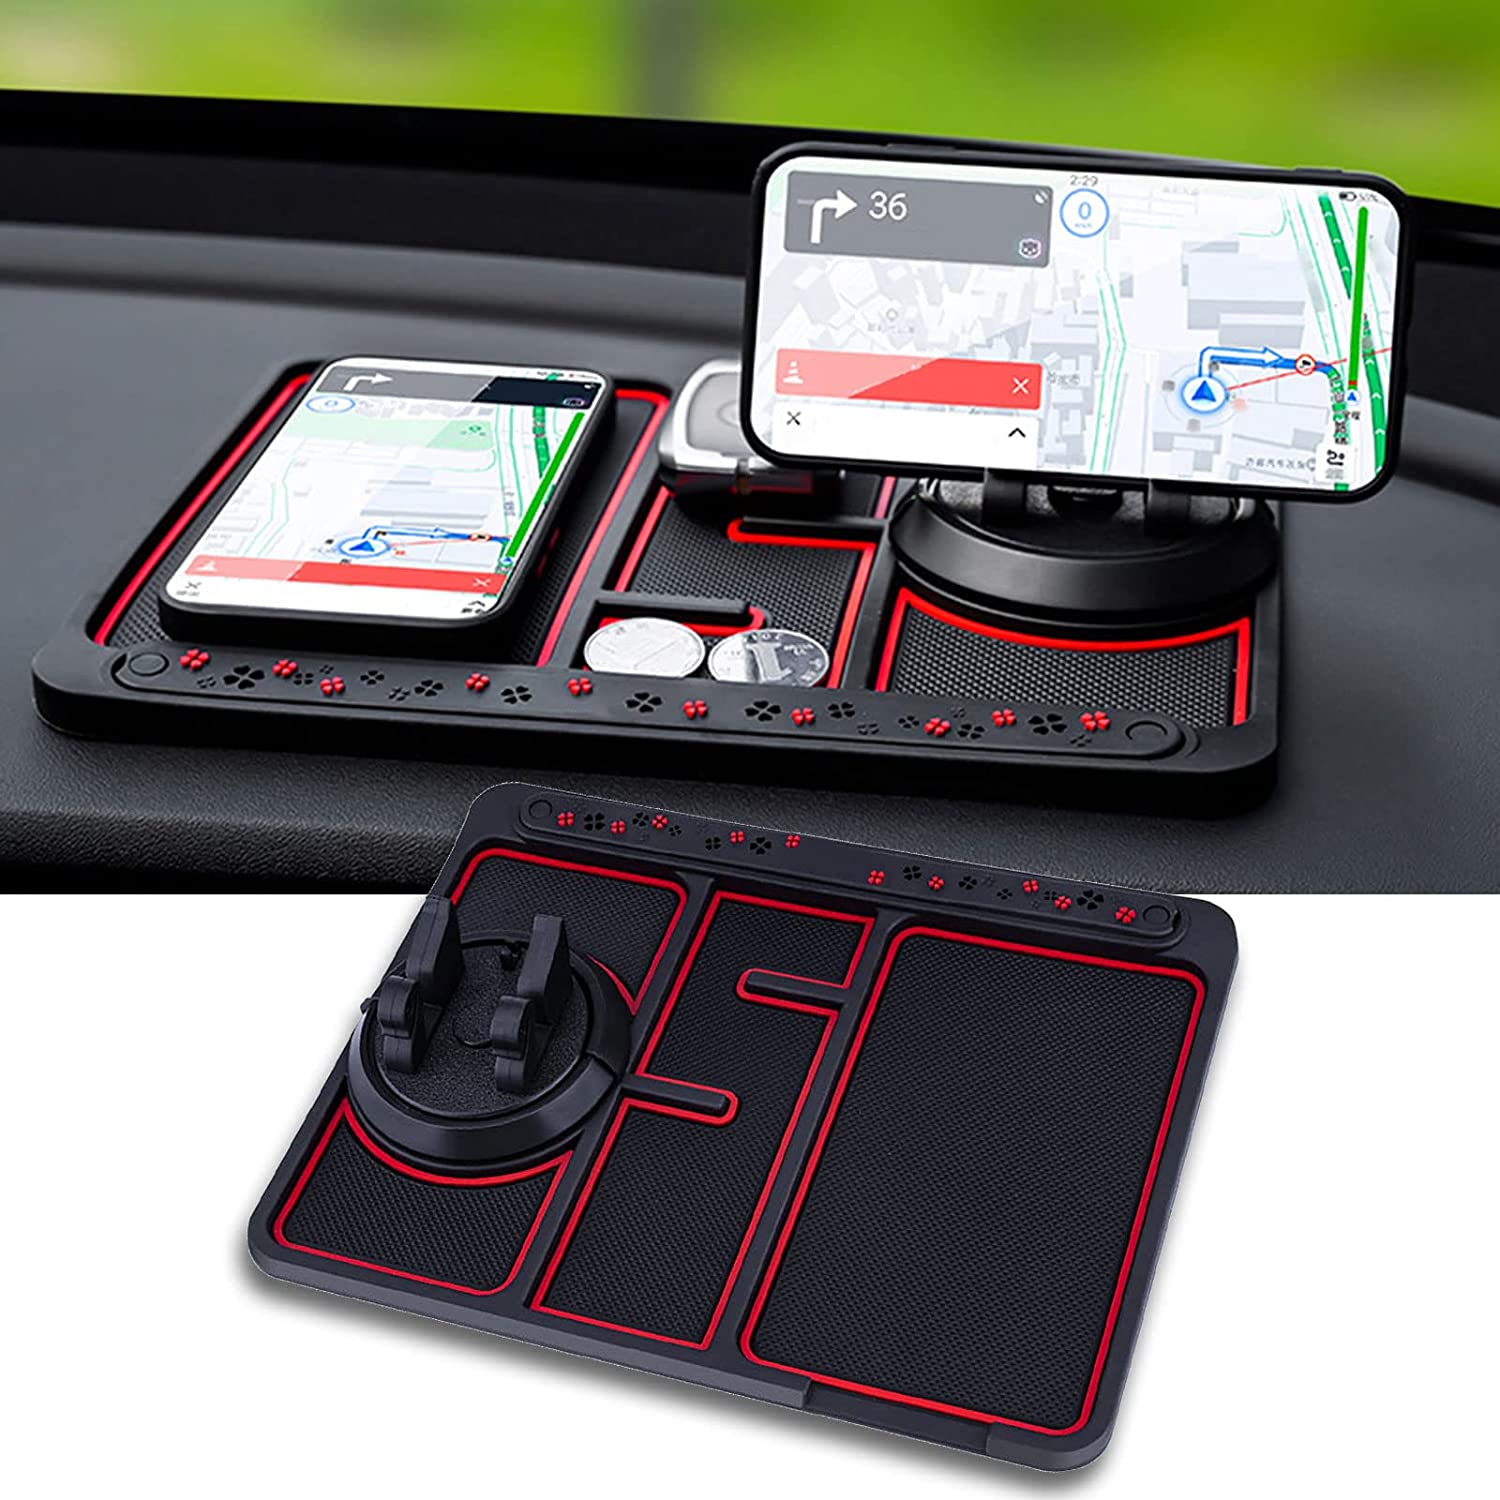 4 in 1 Sticky Dash Mat for Car - Anti-Slip Car Phone Dashboard Pad Mat